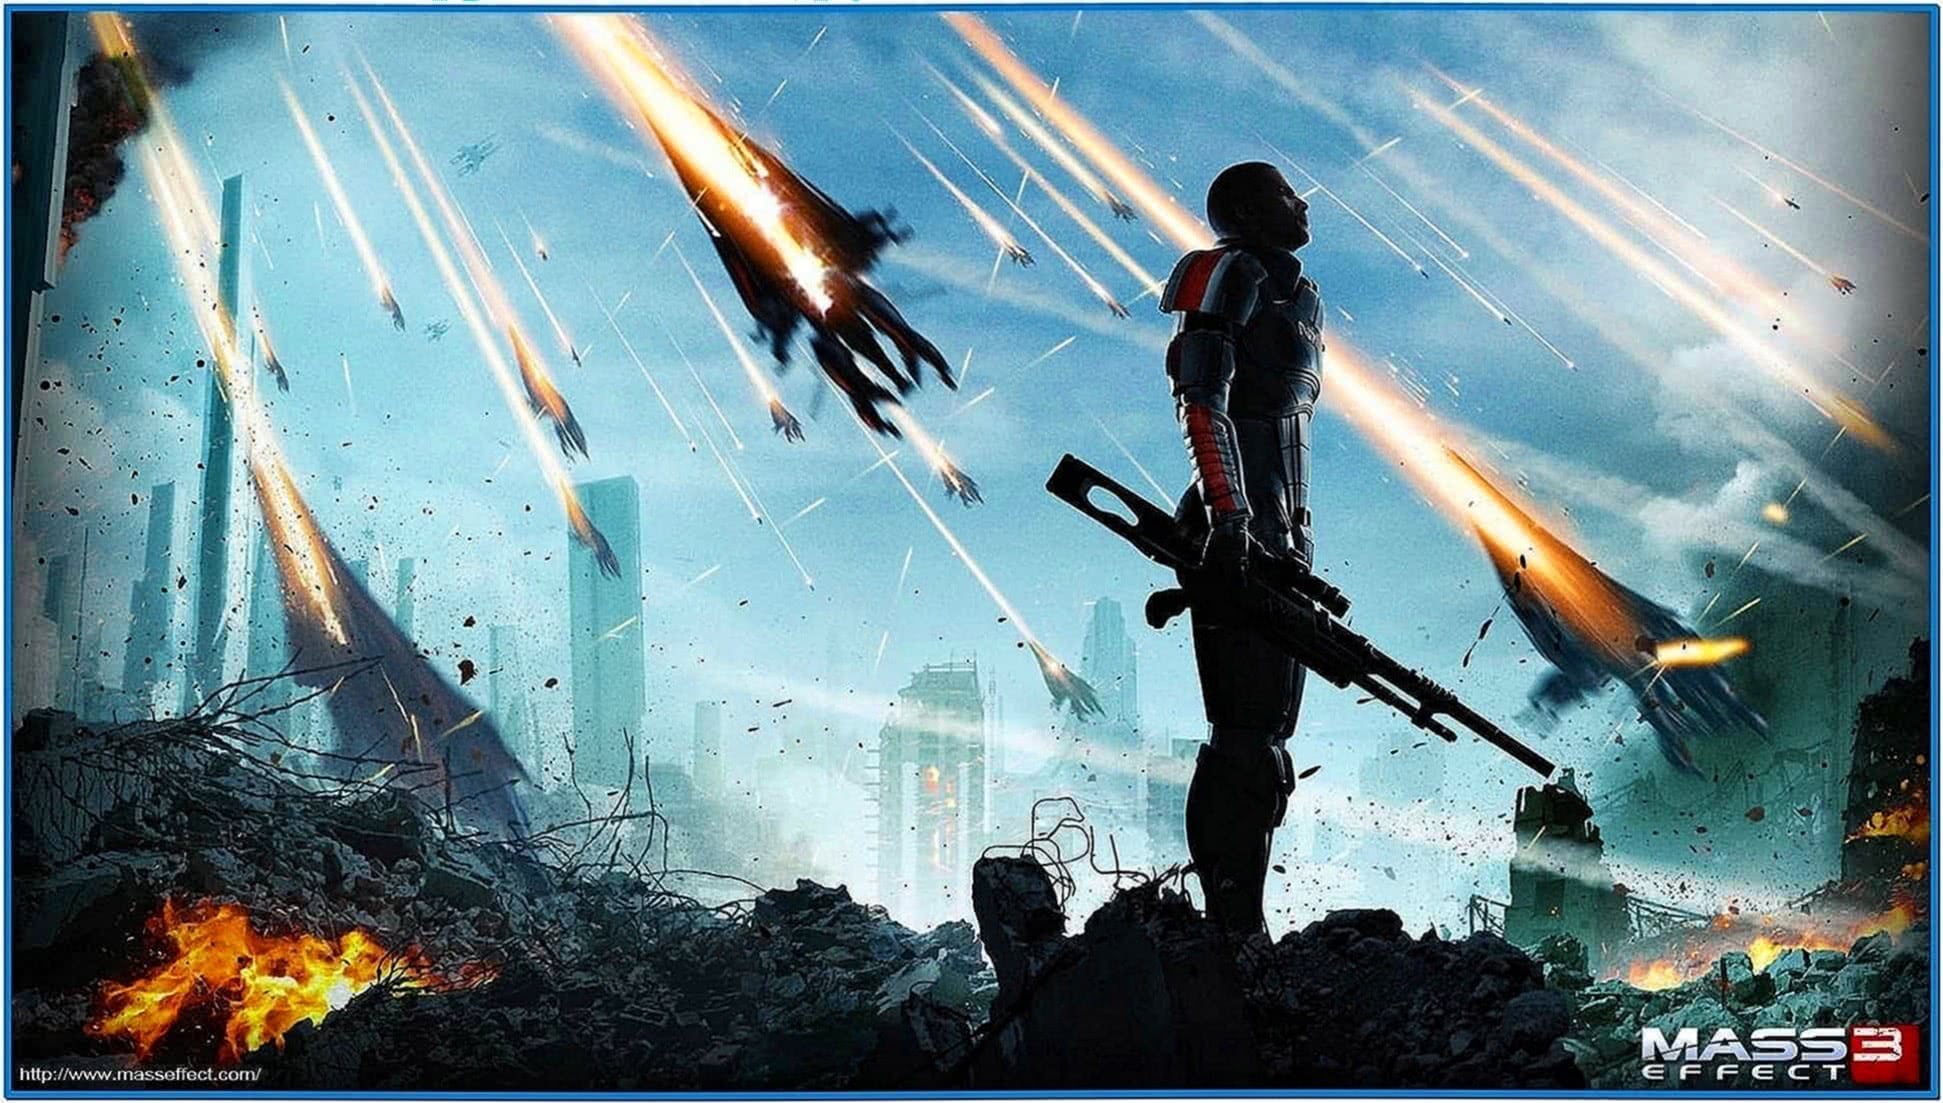 Mass Effect 3 Animated Screensaver